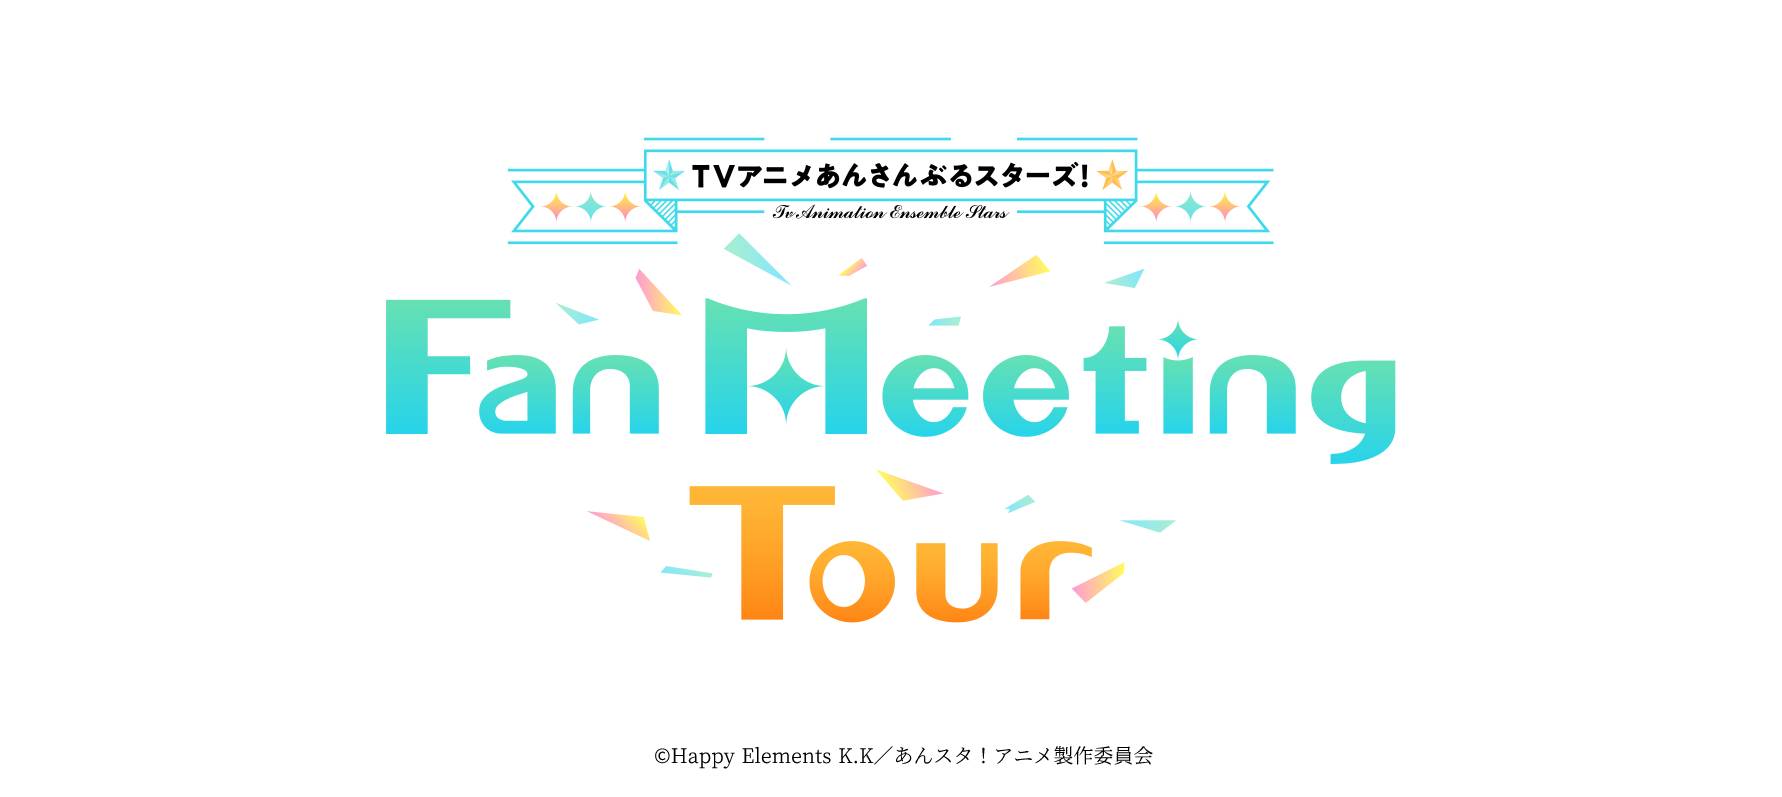 [Streaming+] TV Anime ENSEMBLE STARS! Fan Meeting Tour